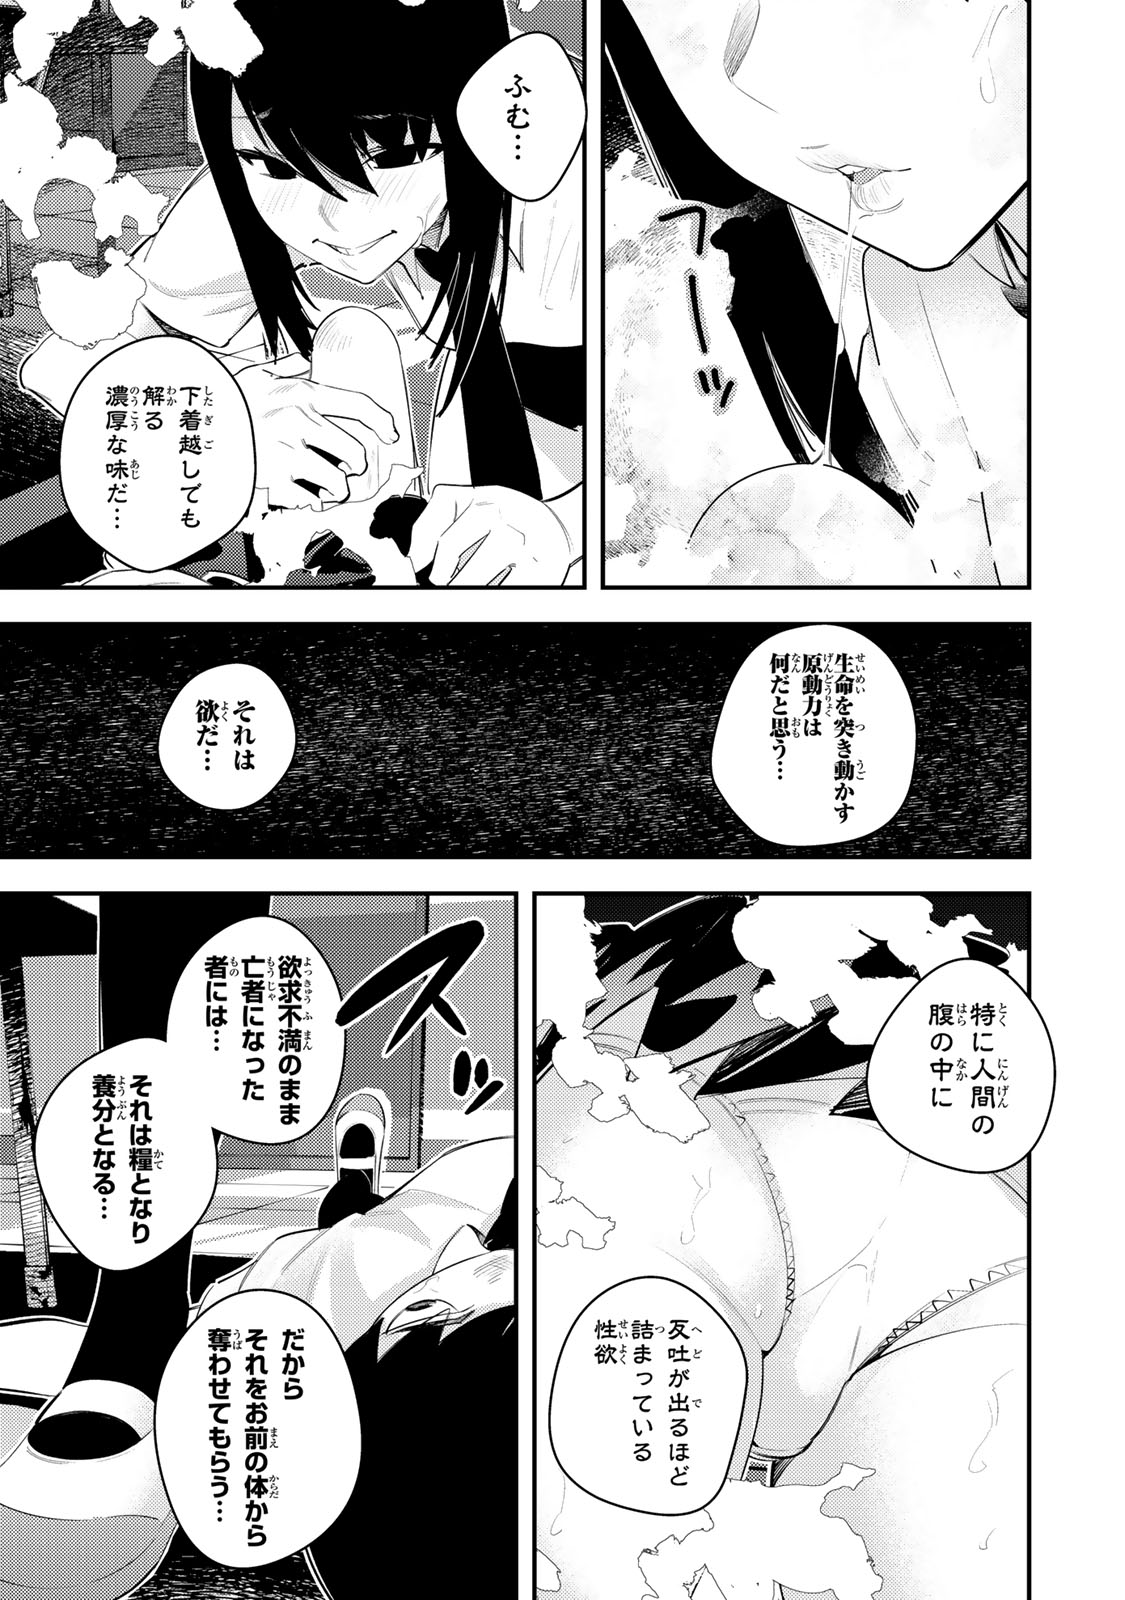 Seima Toubatsu Deneidan - Chapter 1 - Page 20